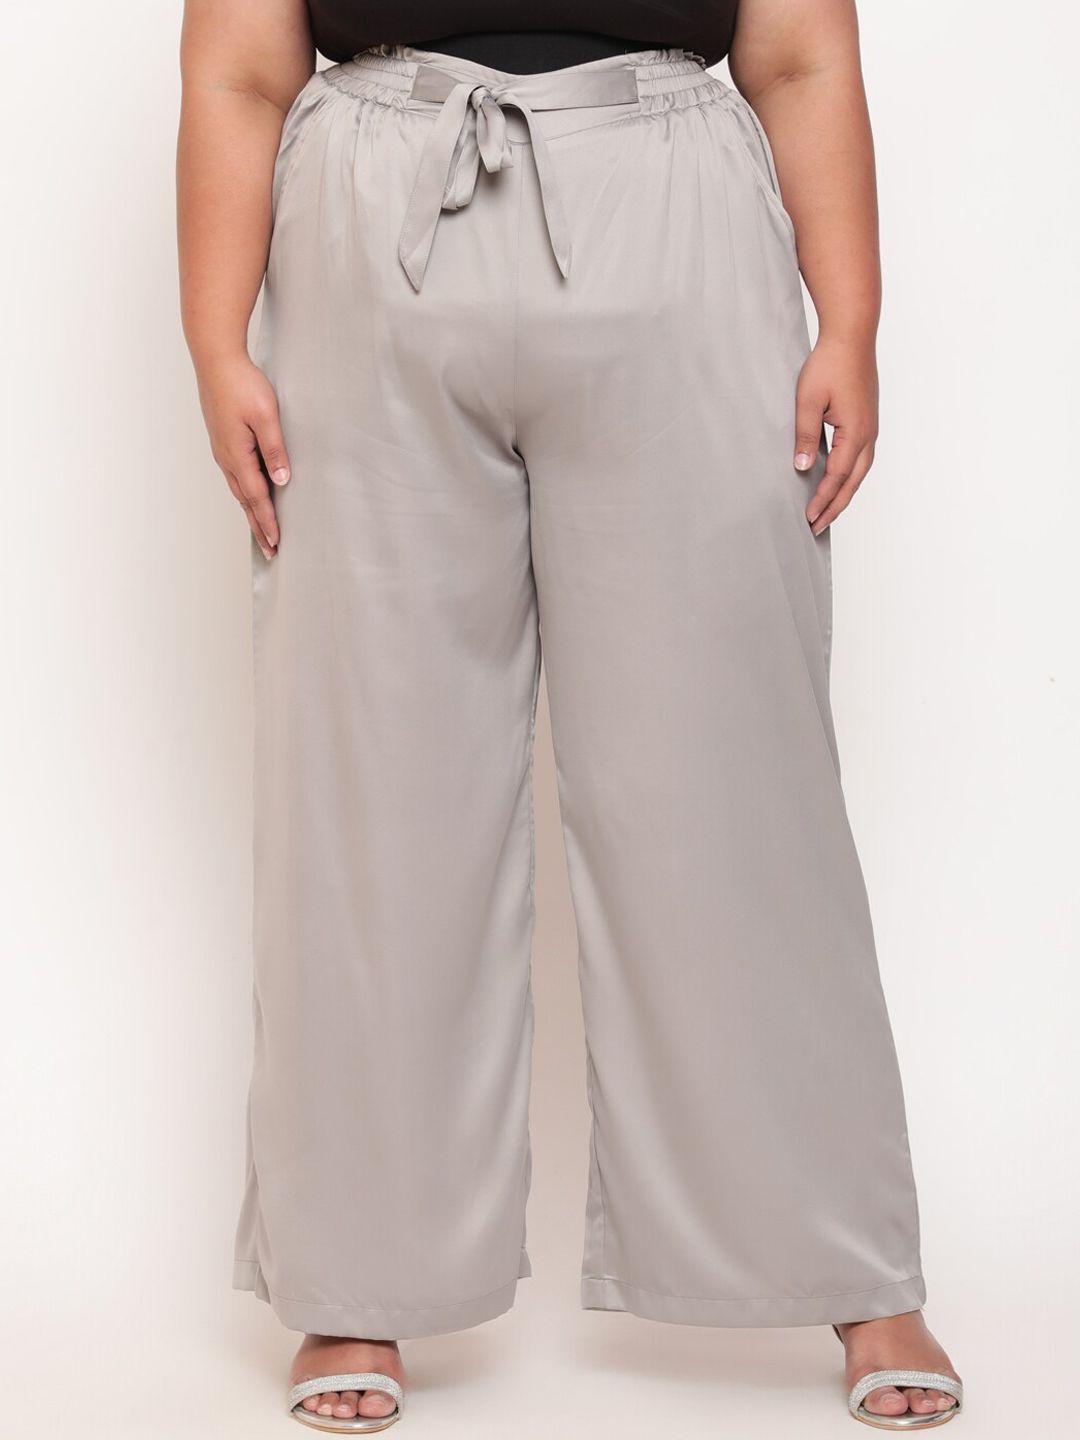 amydus women plus size grey high-rise trouser